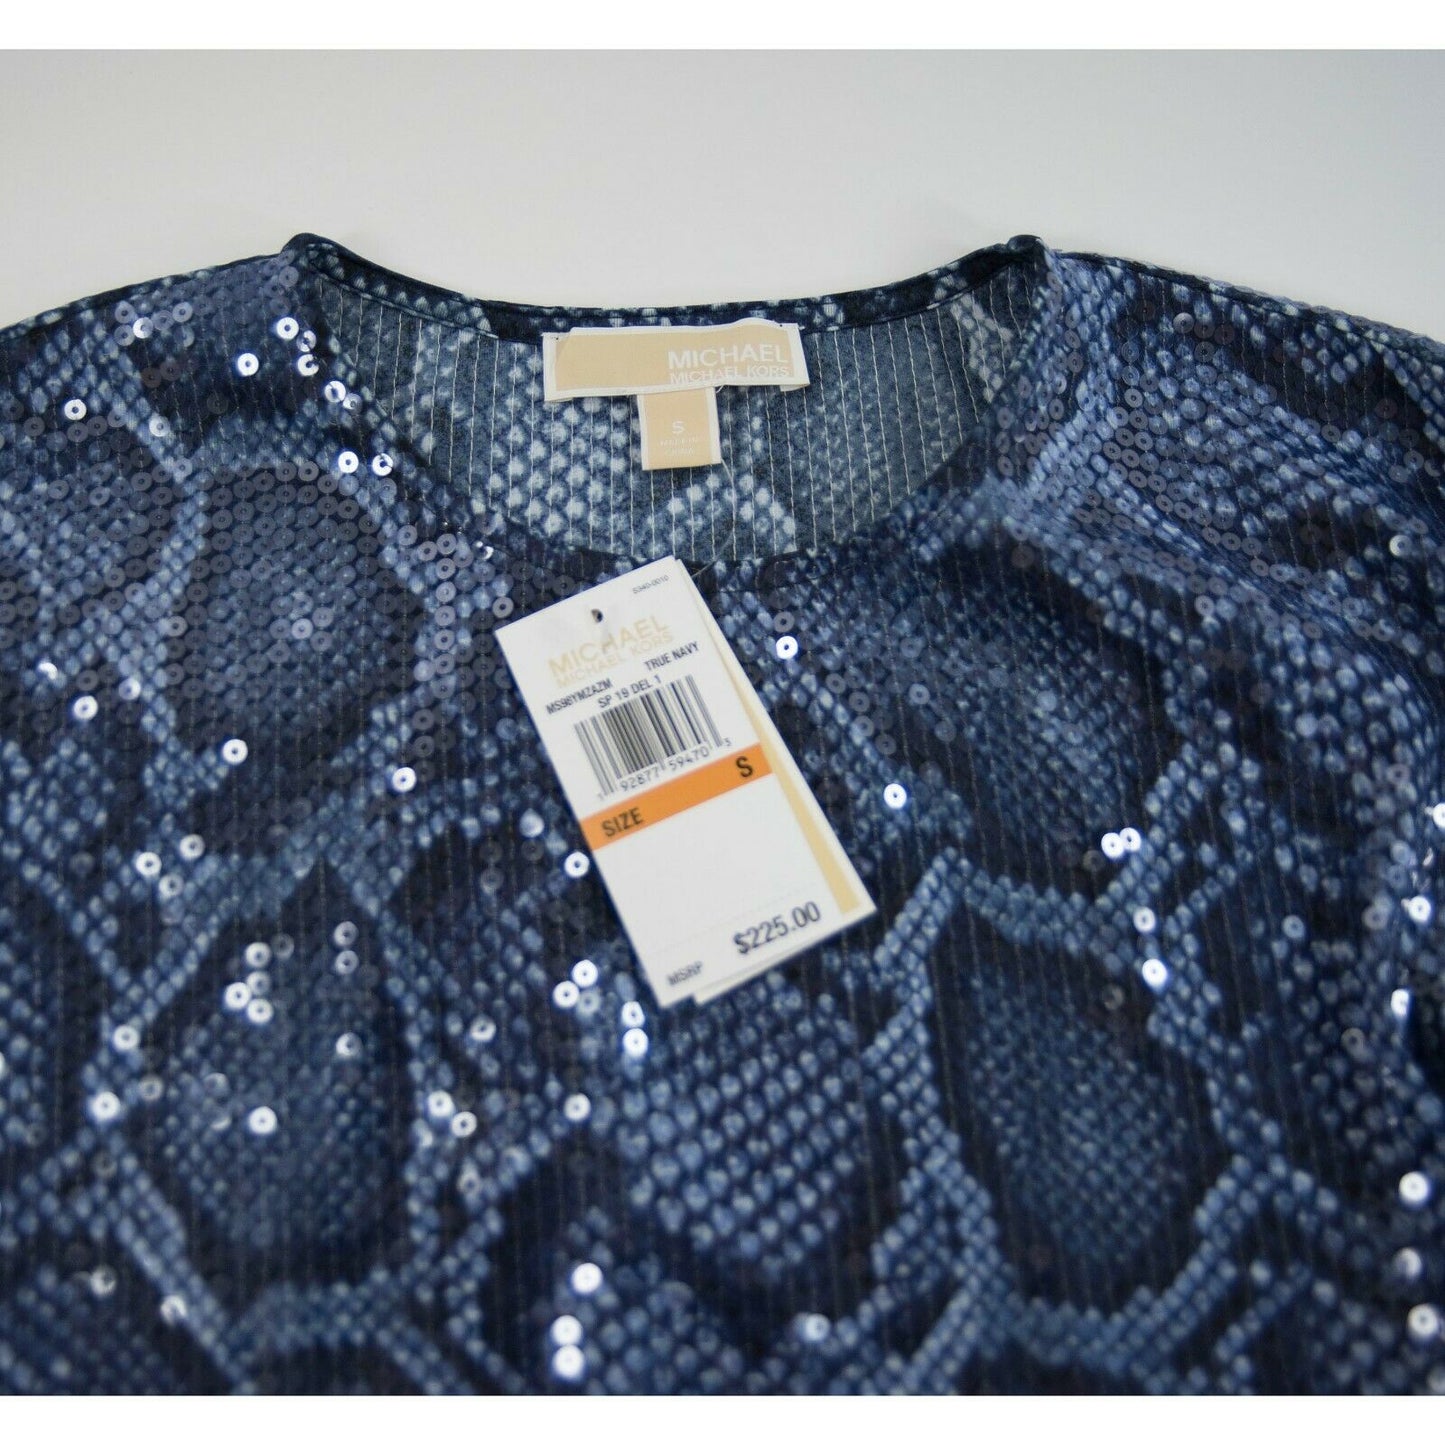 Michael Kors Python Sequin True Navy Snake Print Flounce Dress S NWT $225